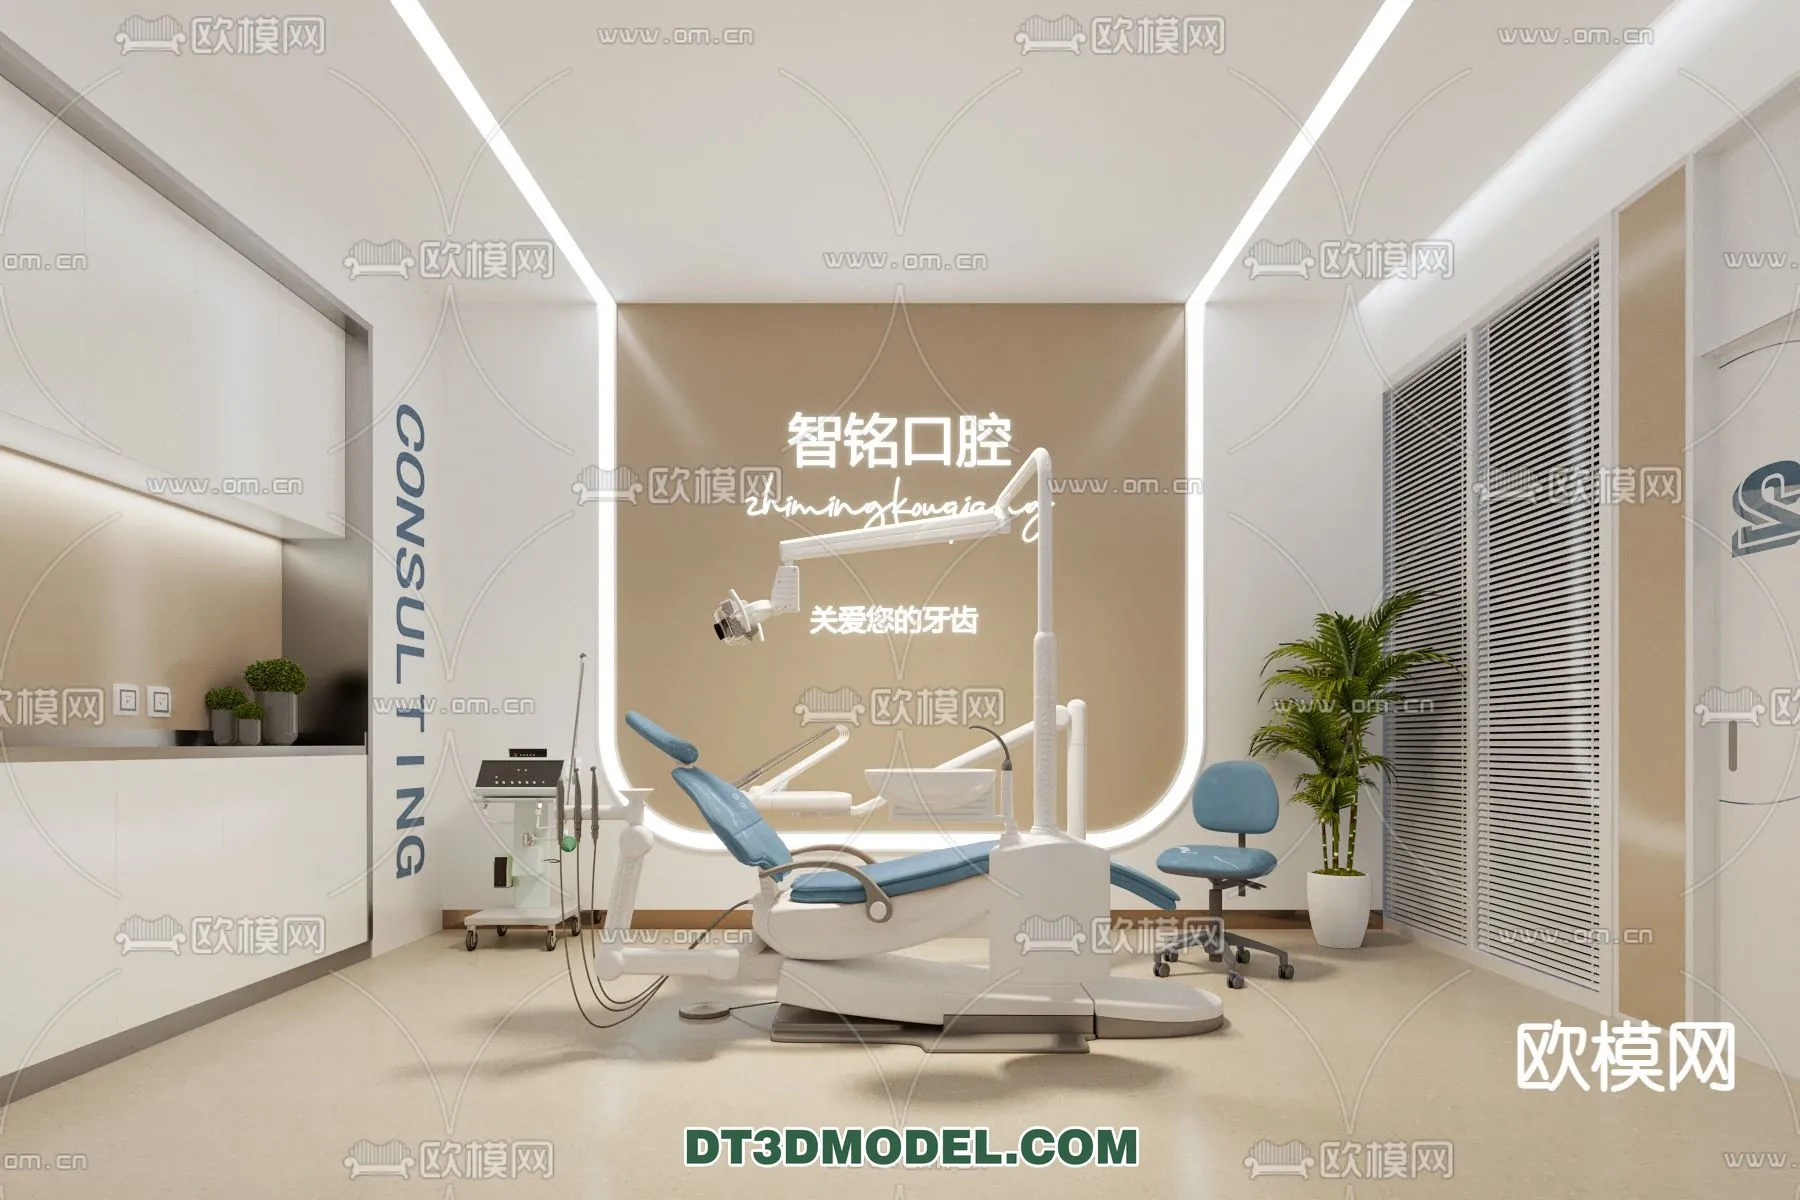 HOSPITAL 3D SCENES – MODERN – 0096